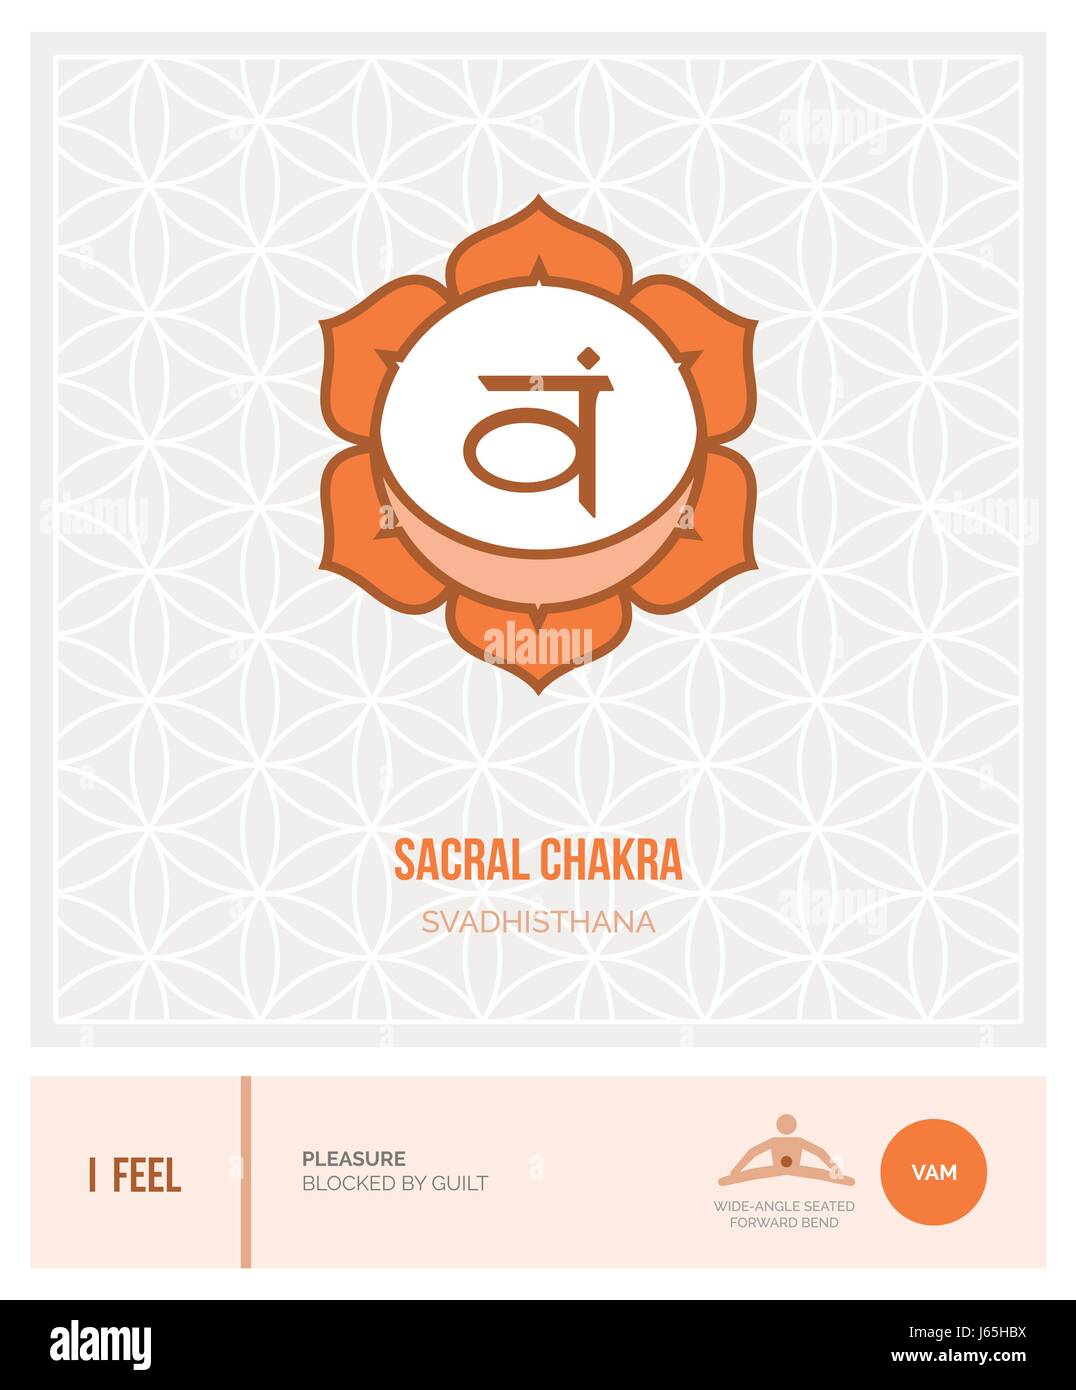 Chakra Yoga Sequence: Swadhisthana (Sacral) Chakra Yoga